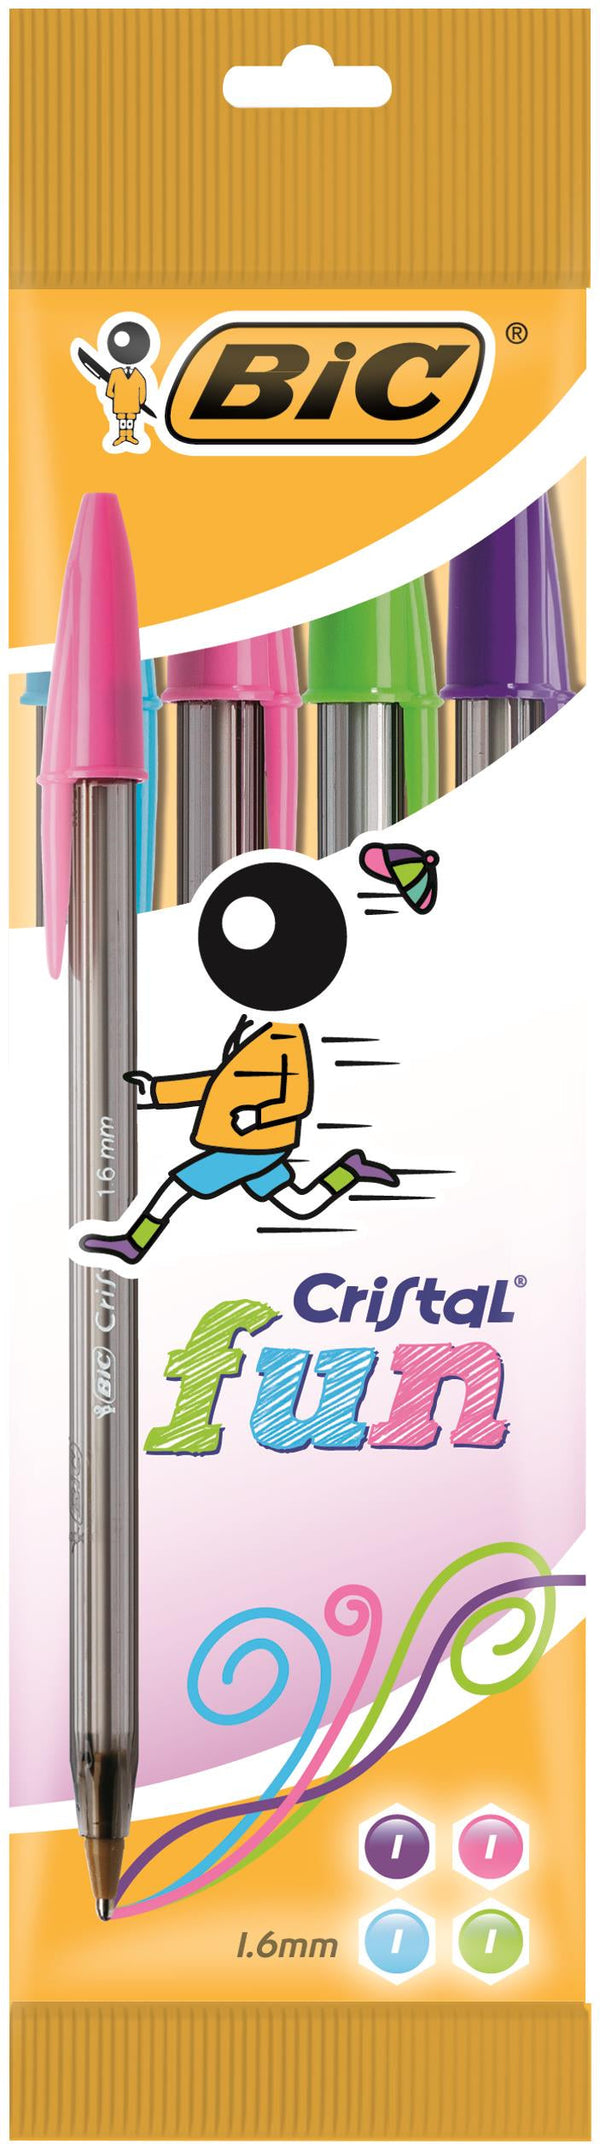 Bic Cristal FUN Assorted 1.6mm Ballpoint Pen (Pack 4) 8957921 - ONE CLICK SUPPLIES